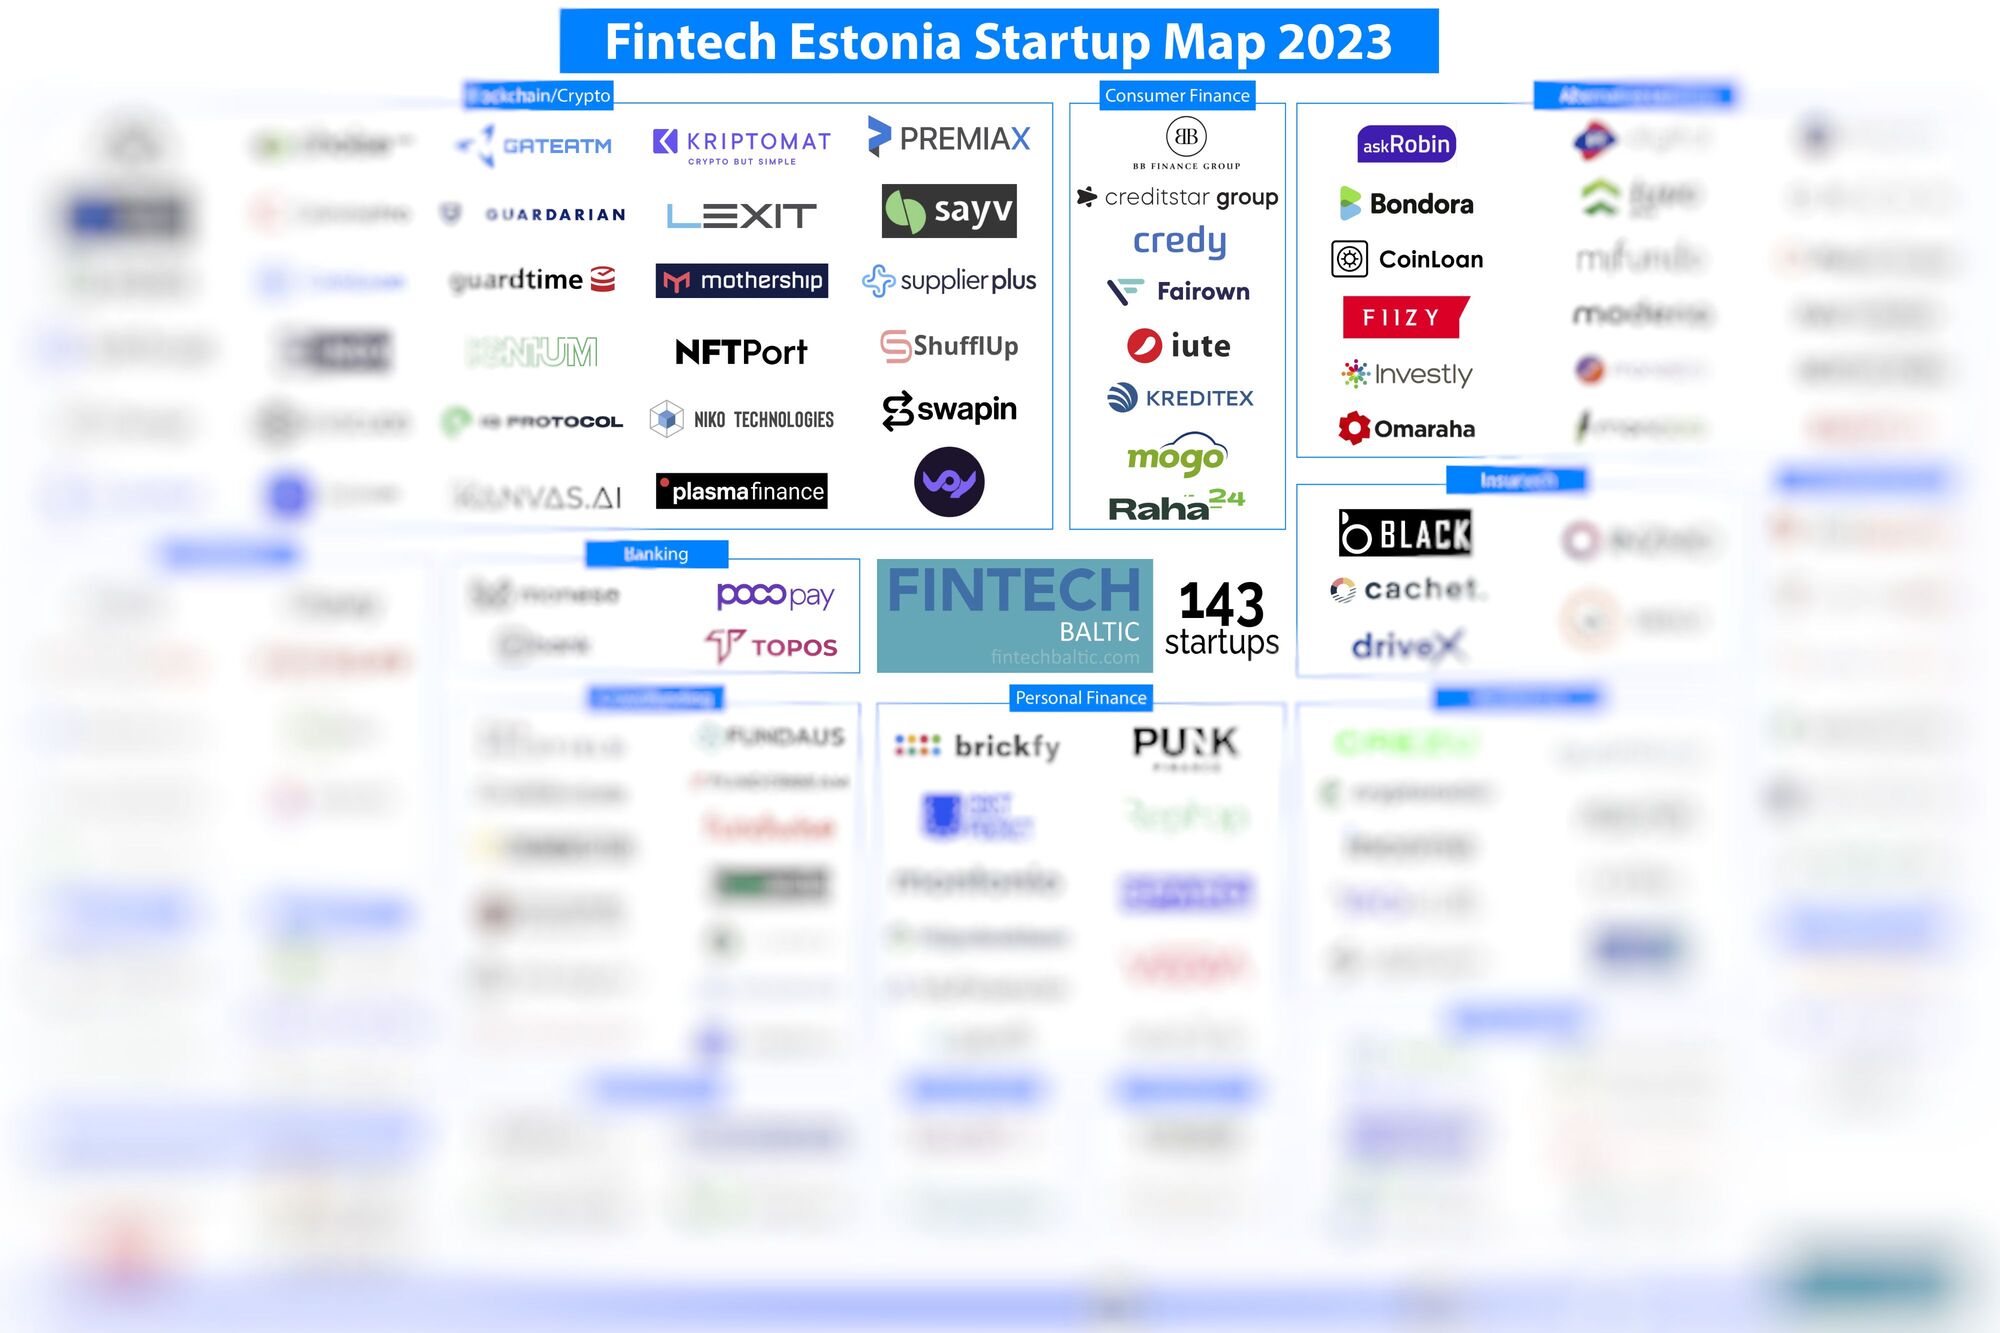 Estonia Fintech Startup Map 2023